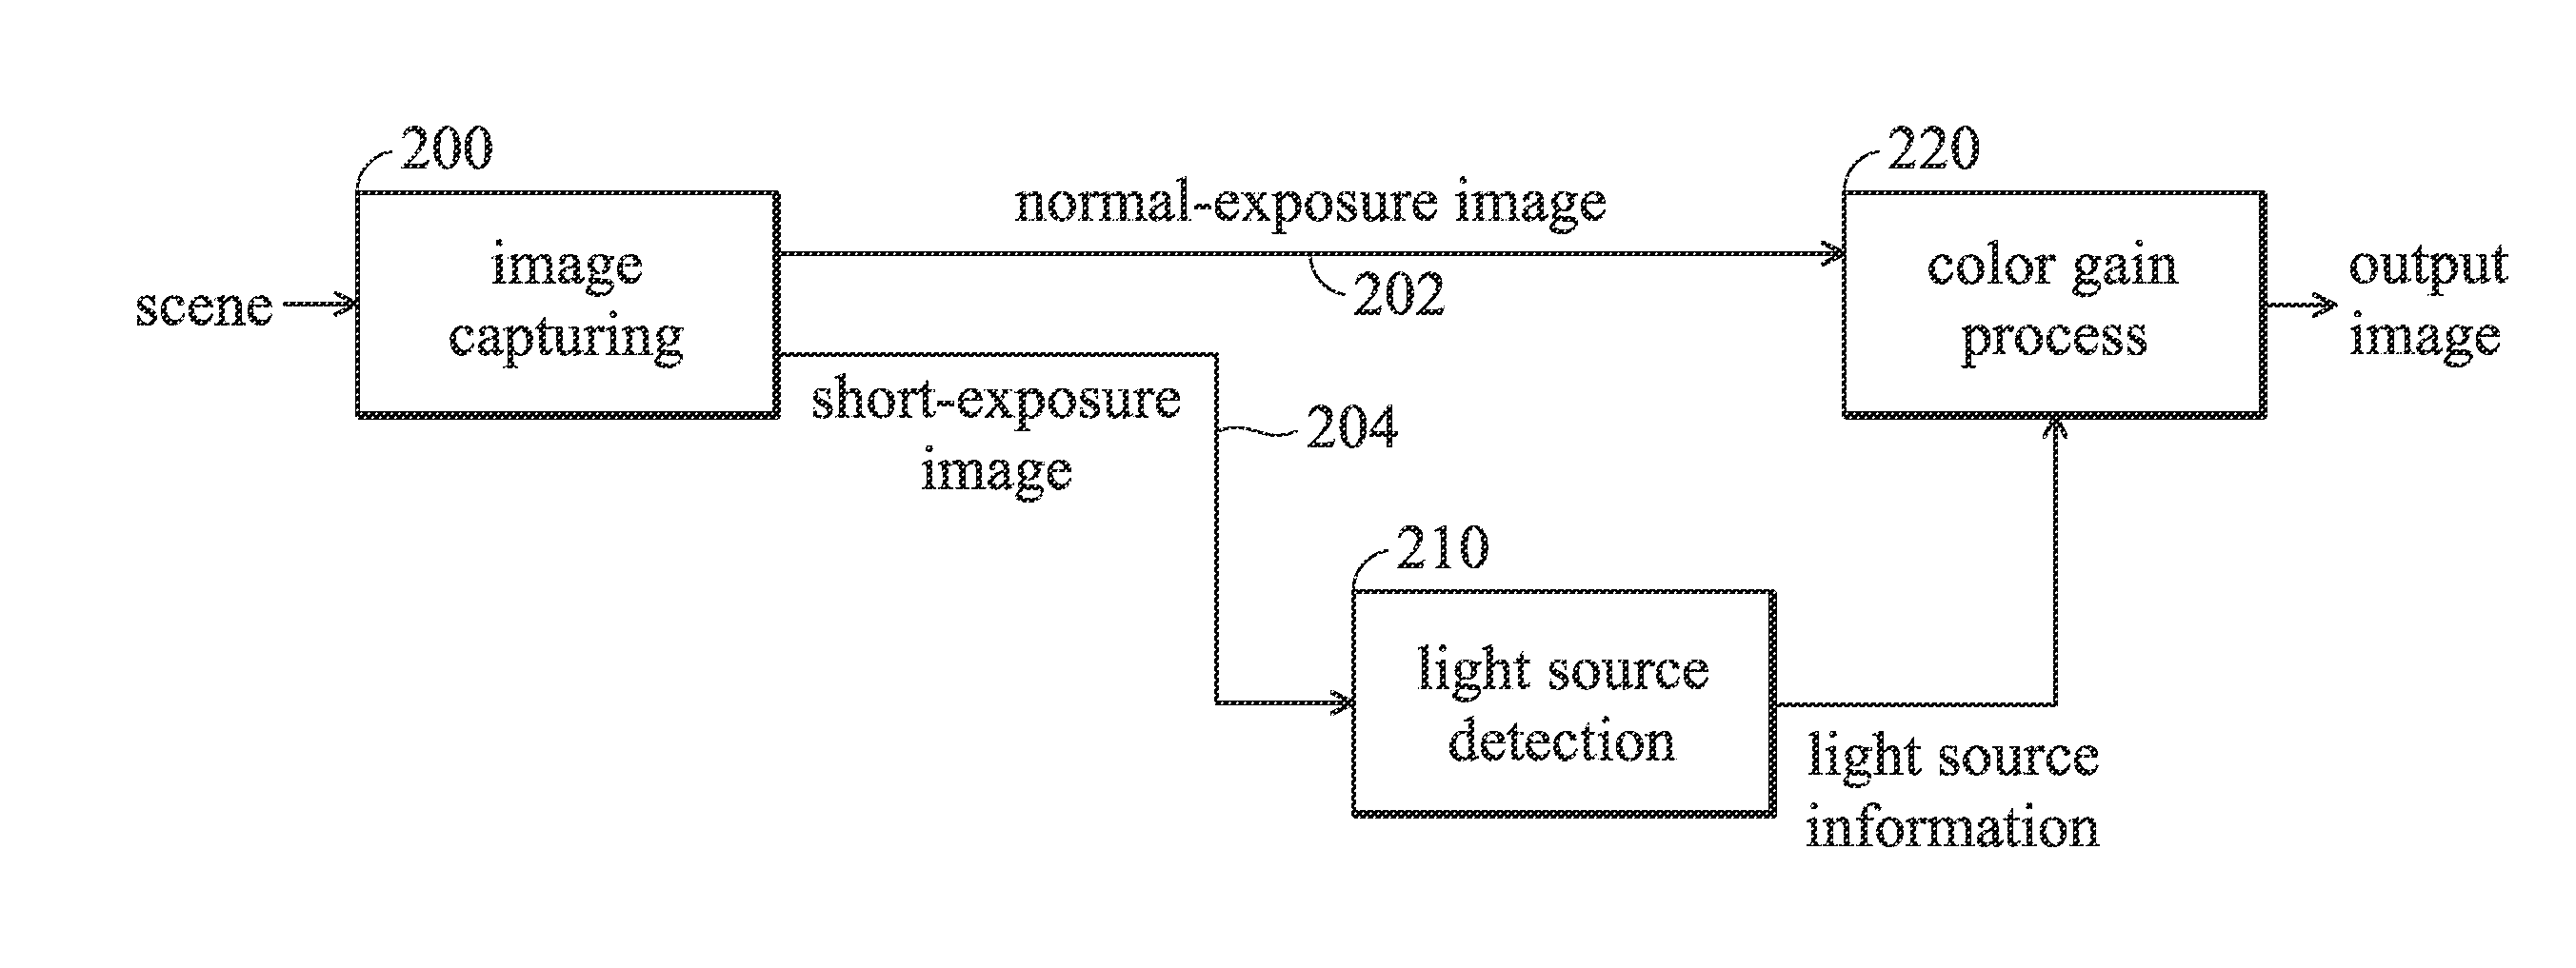 White balance method in multi-exposure imaging system